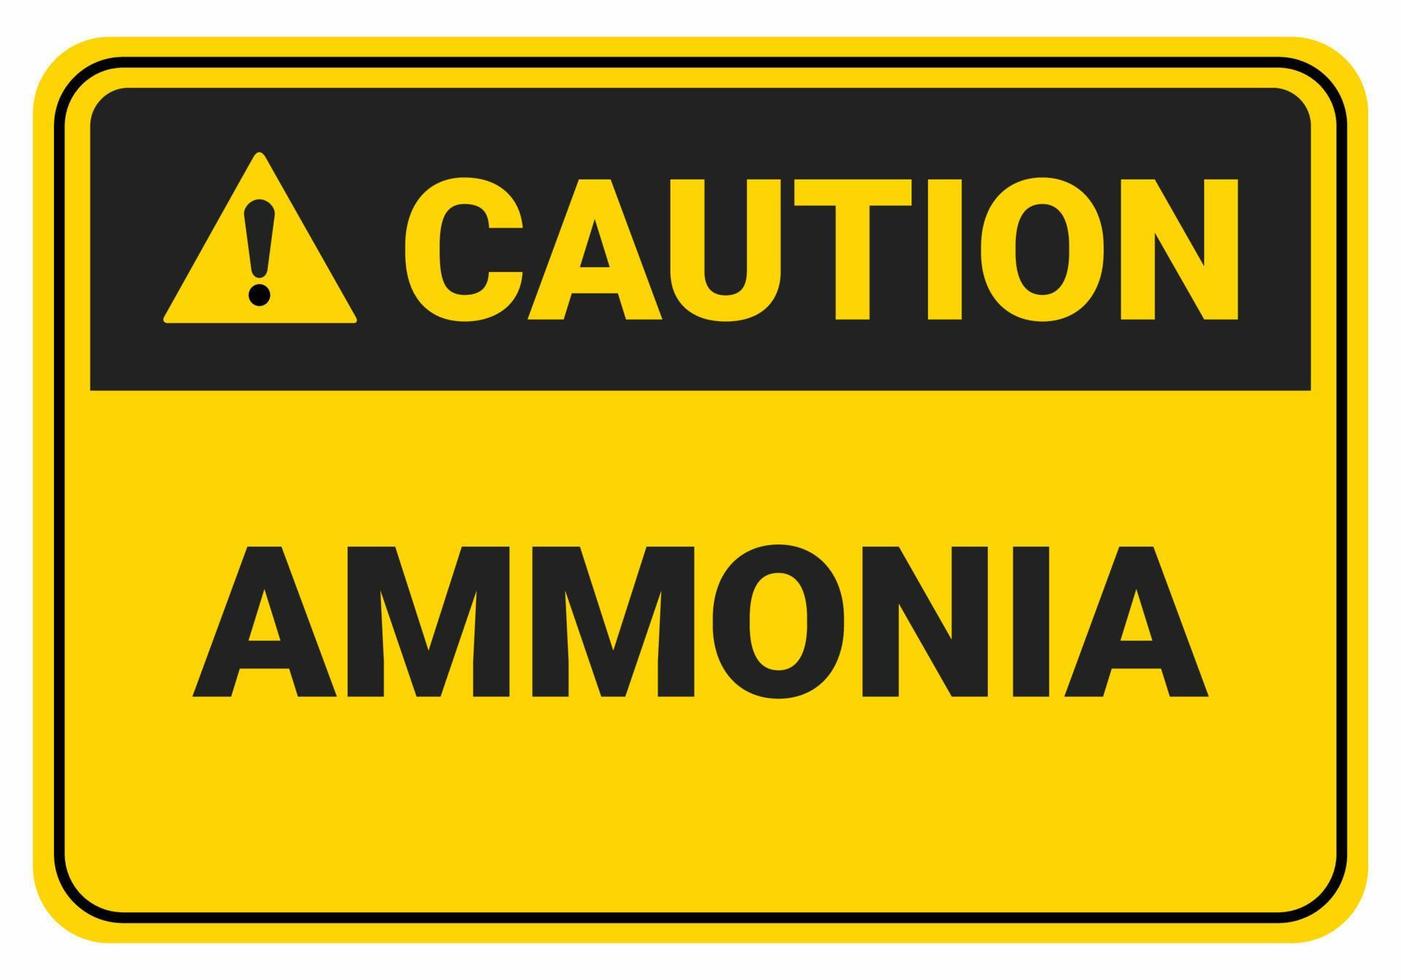 Caution Amonia. beware the dangers of Amonia. Safety sign Vector Illustration. OSHA and ANSI standard sign. eps10